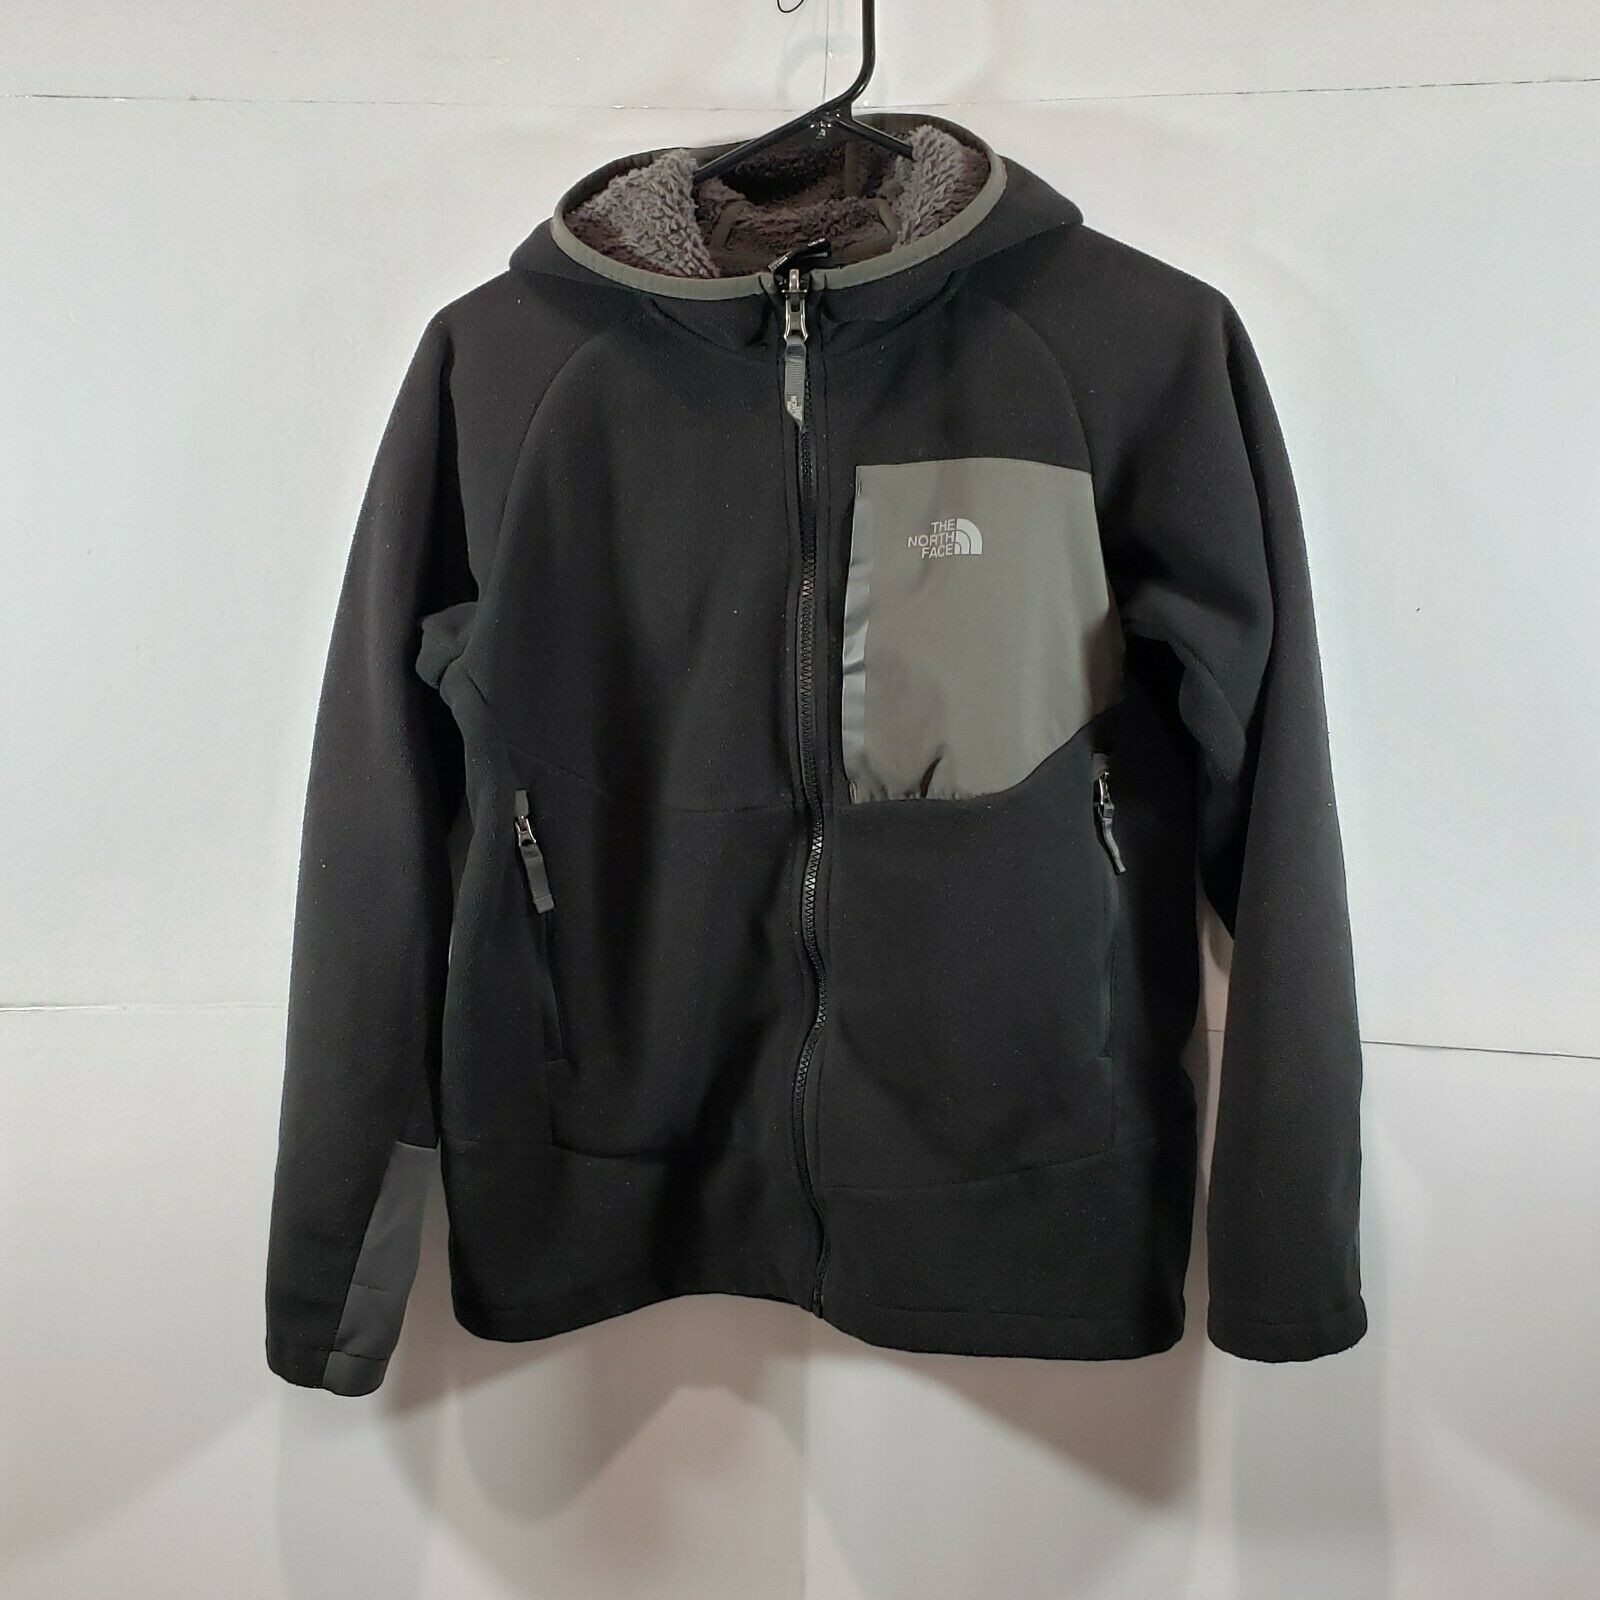 The North Face Boys Large 14-16 Black/gray Fleece Jacket Hoodie Full Zip